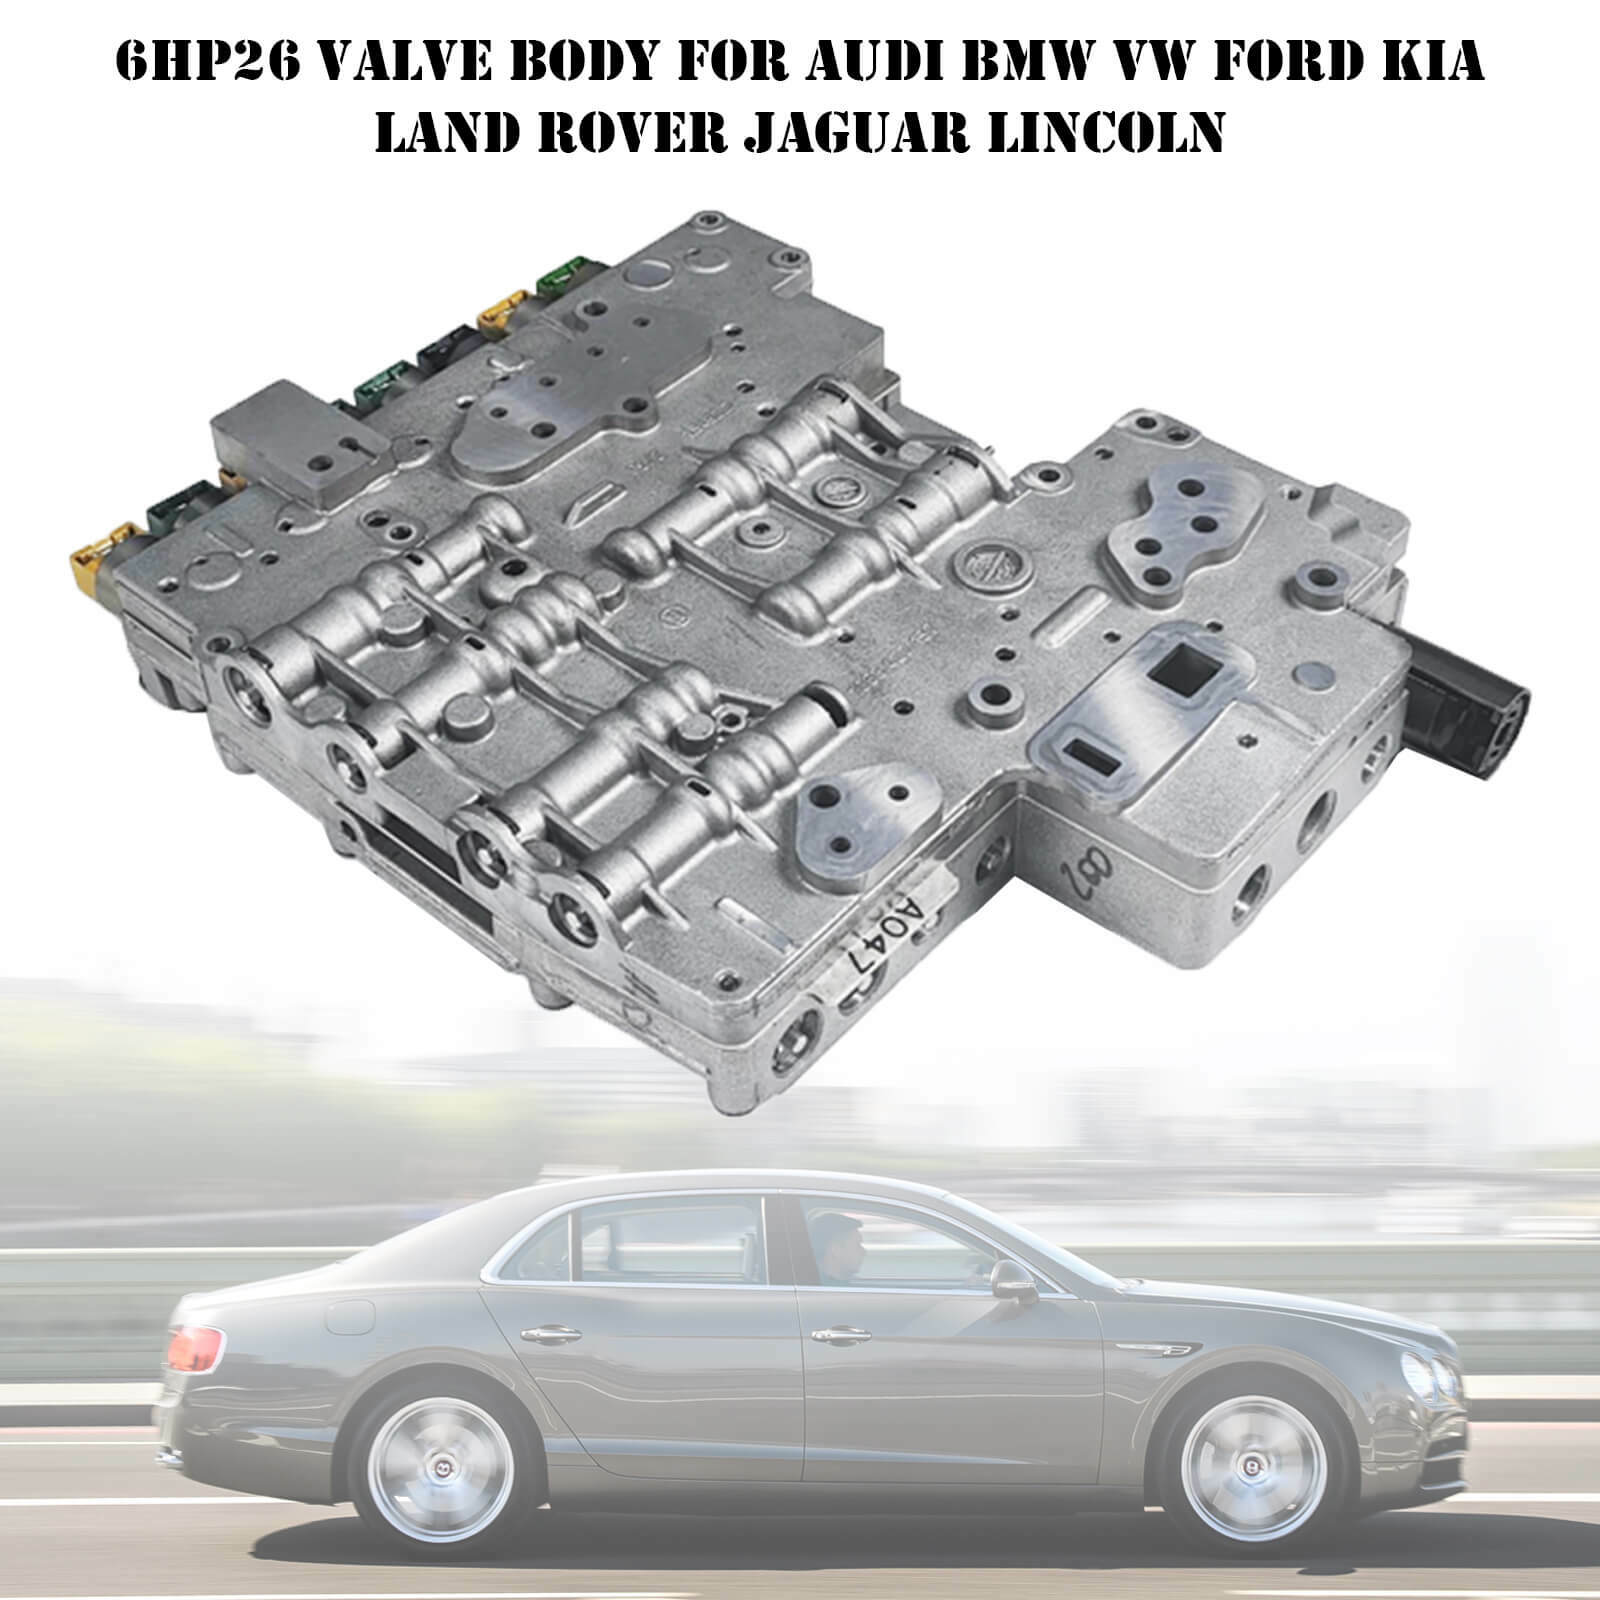 6HP26 Valve Body For Audi BMW VW Ford Kia LAND ROVER JAGUAR LINCOLN